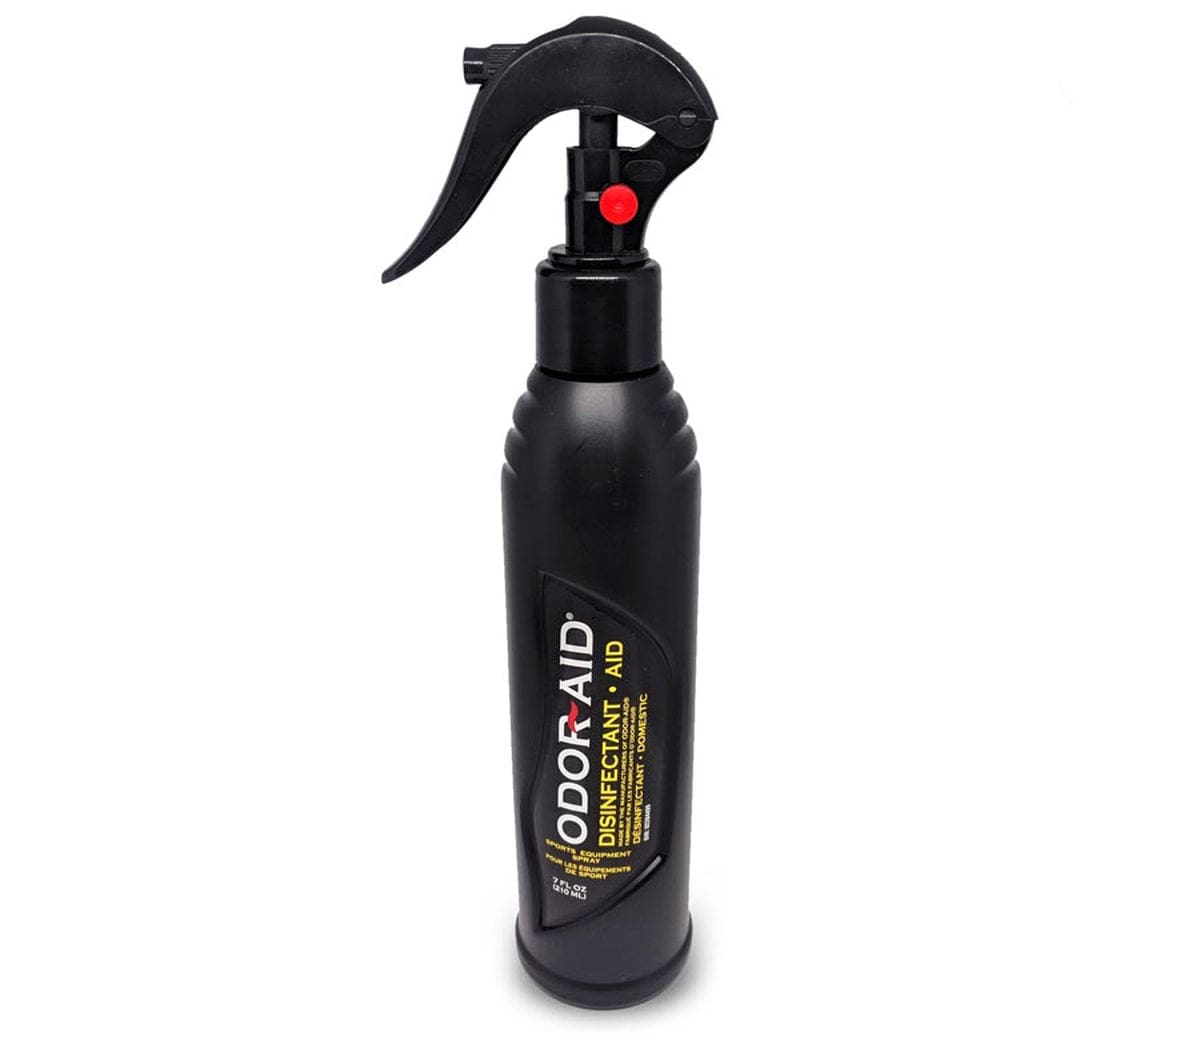 Odor Aid Deodorizer Spray - Mini - The Hockey Shop Source For Sports